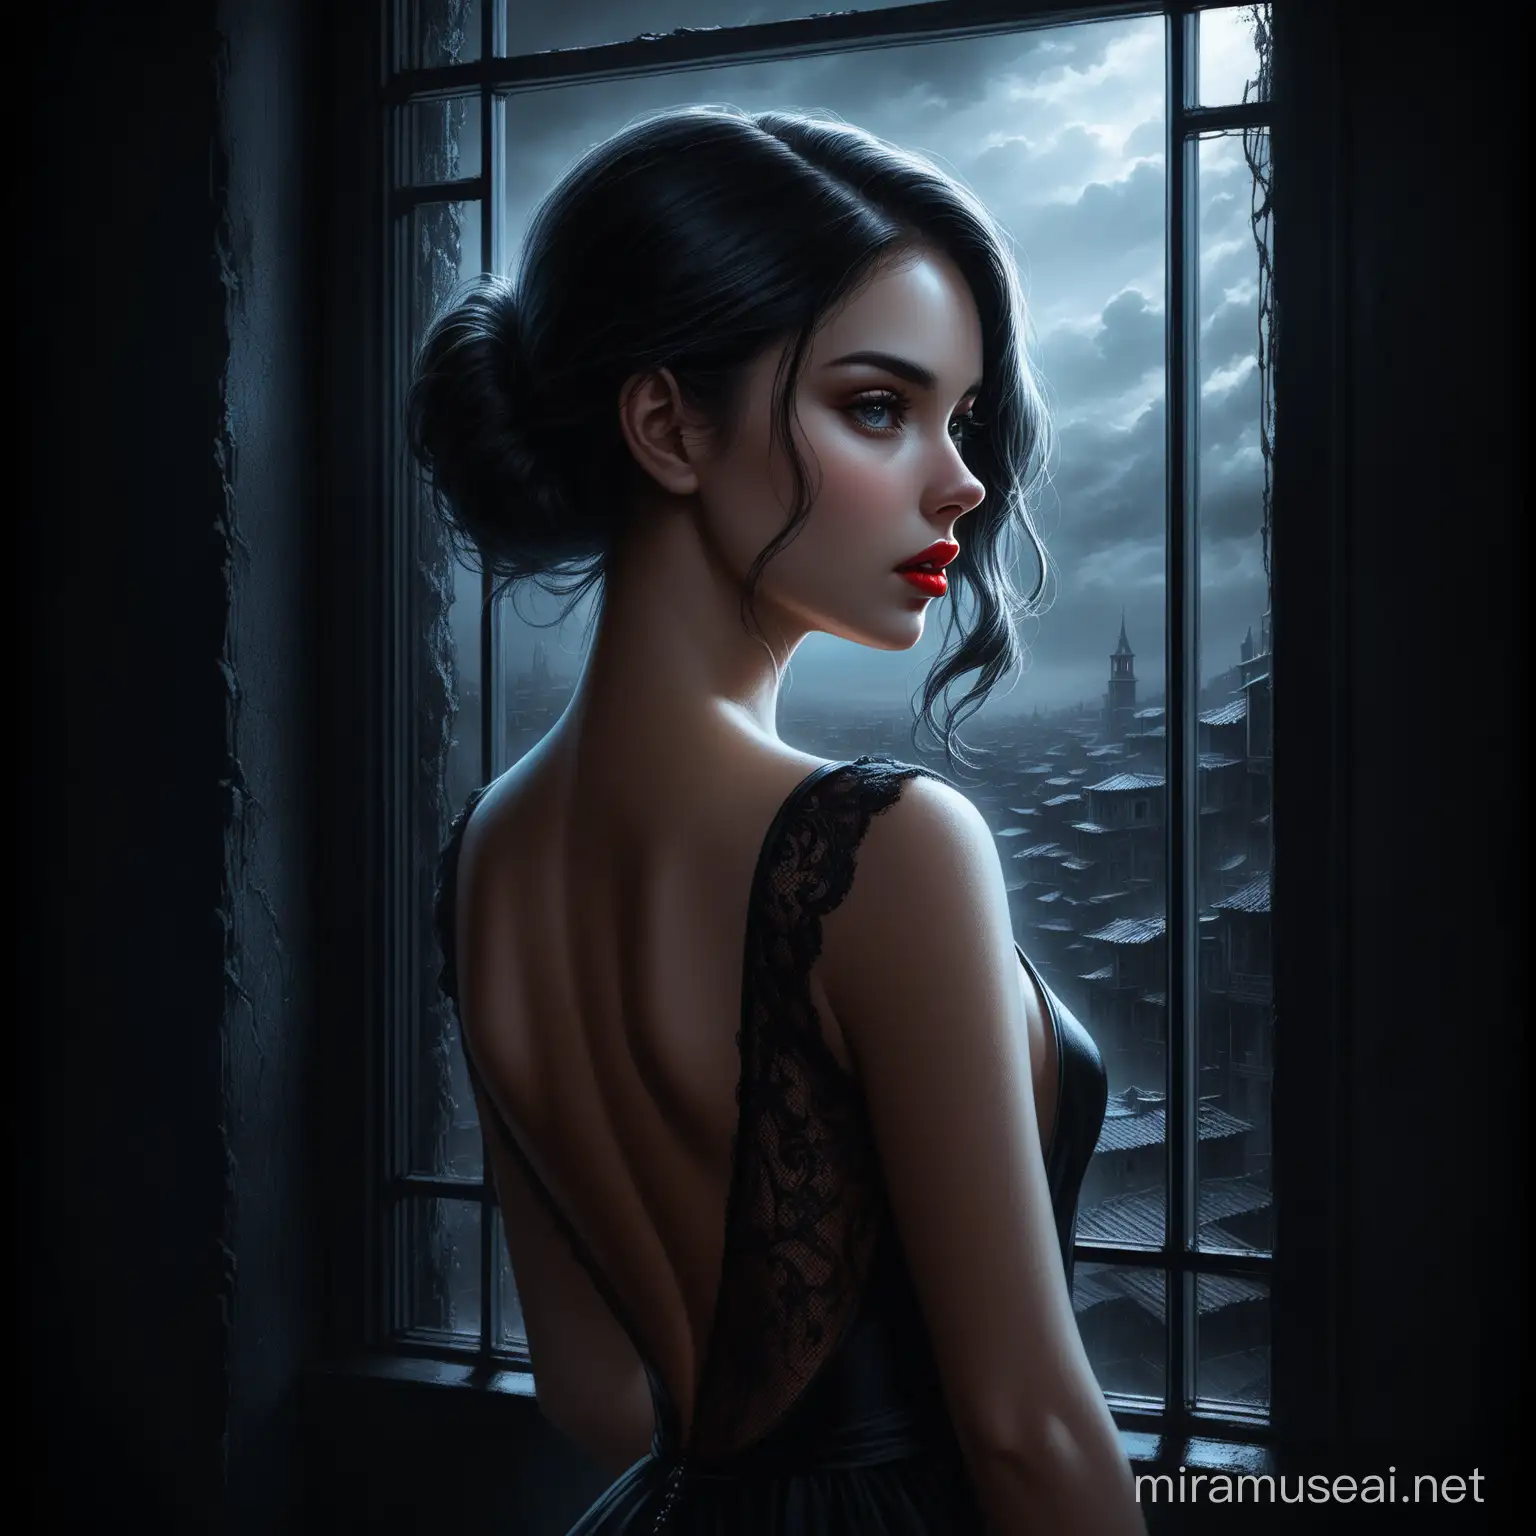 Dramatic Portrait of Beautiful Girl in Black Dress by Window